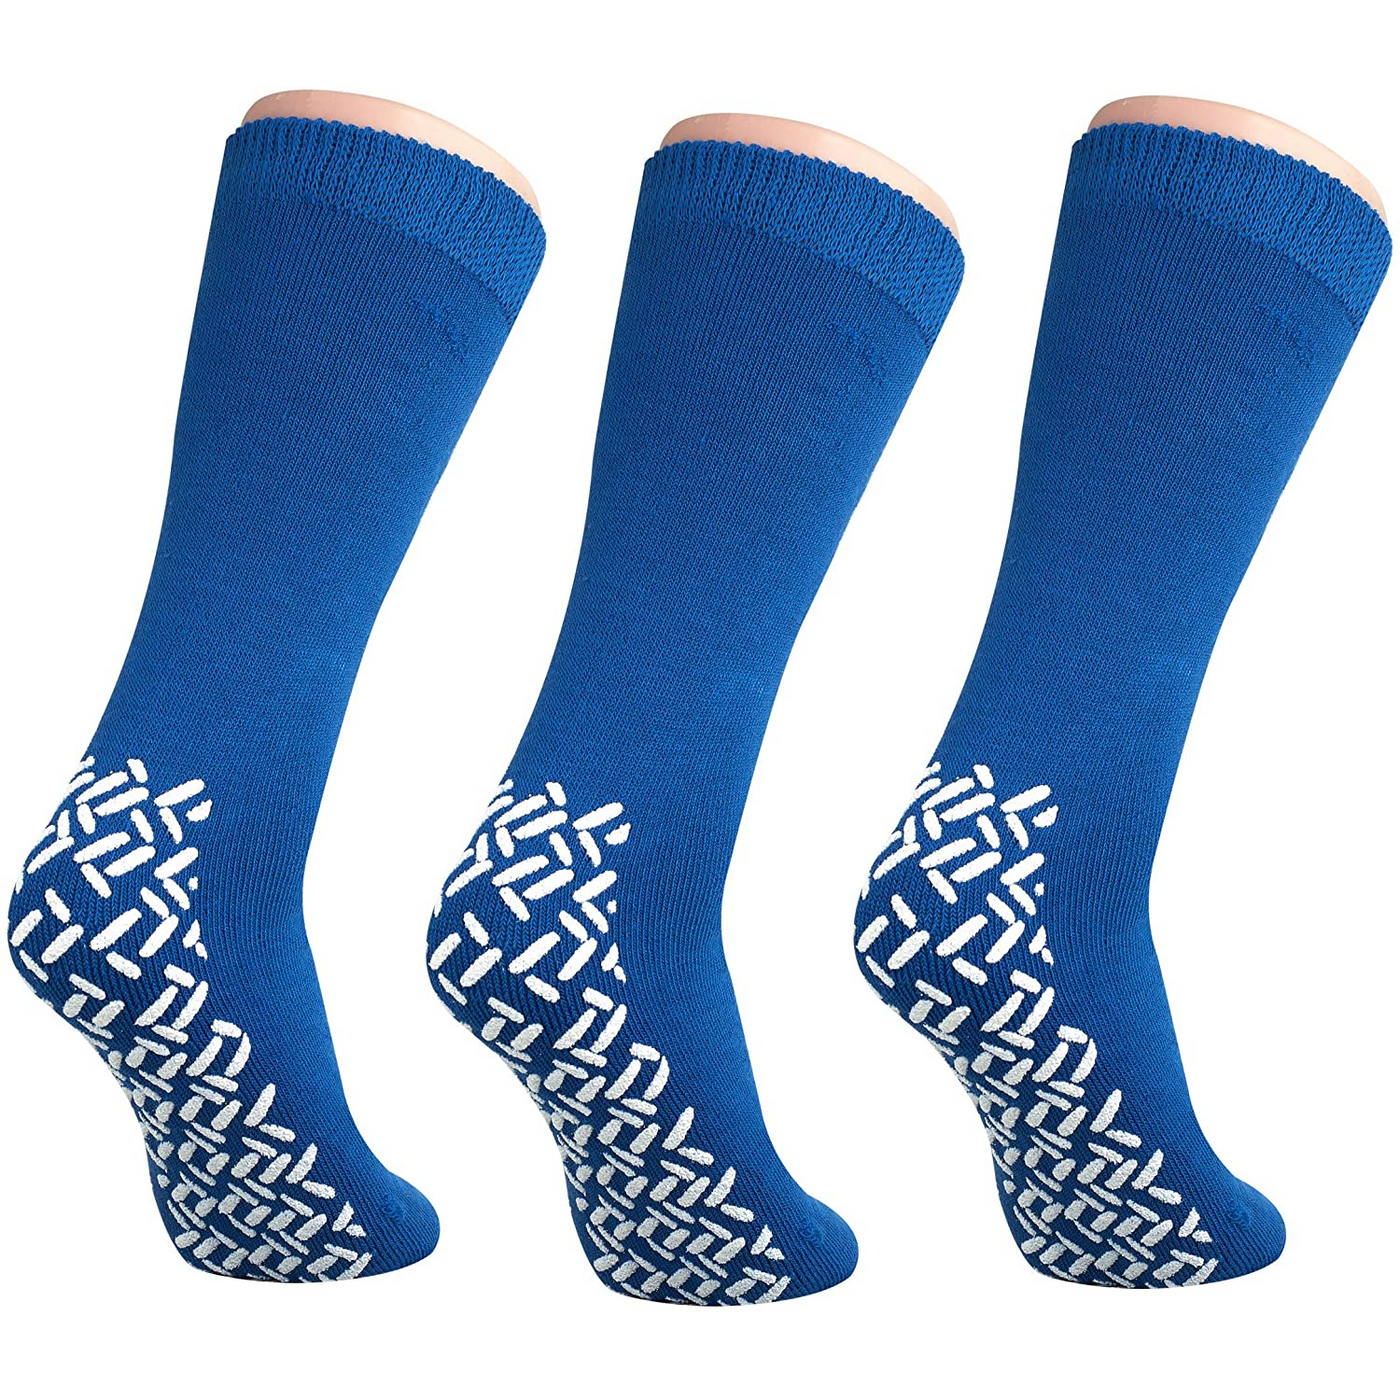 Non Skid Ankle Socks - (4 Pairs) - L/XL - Anti Slip Socks for